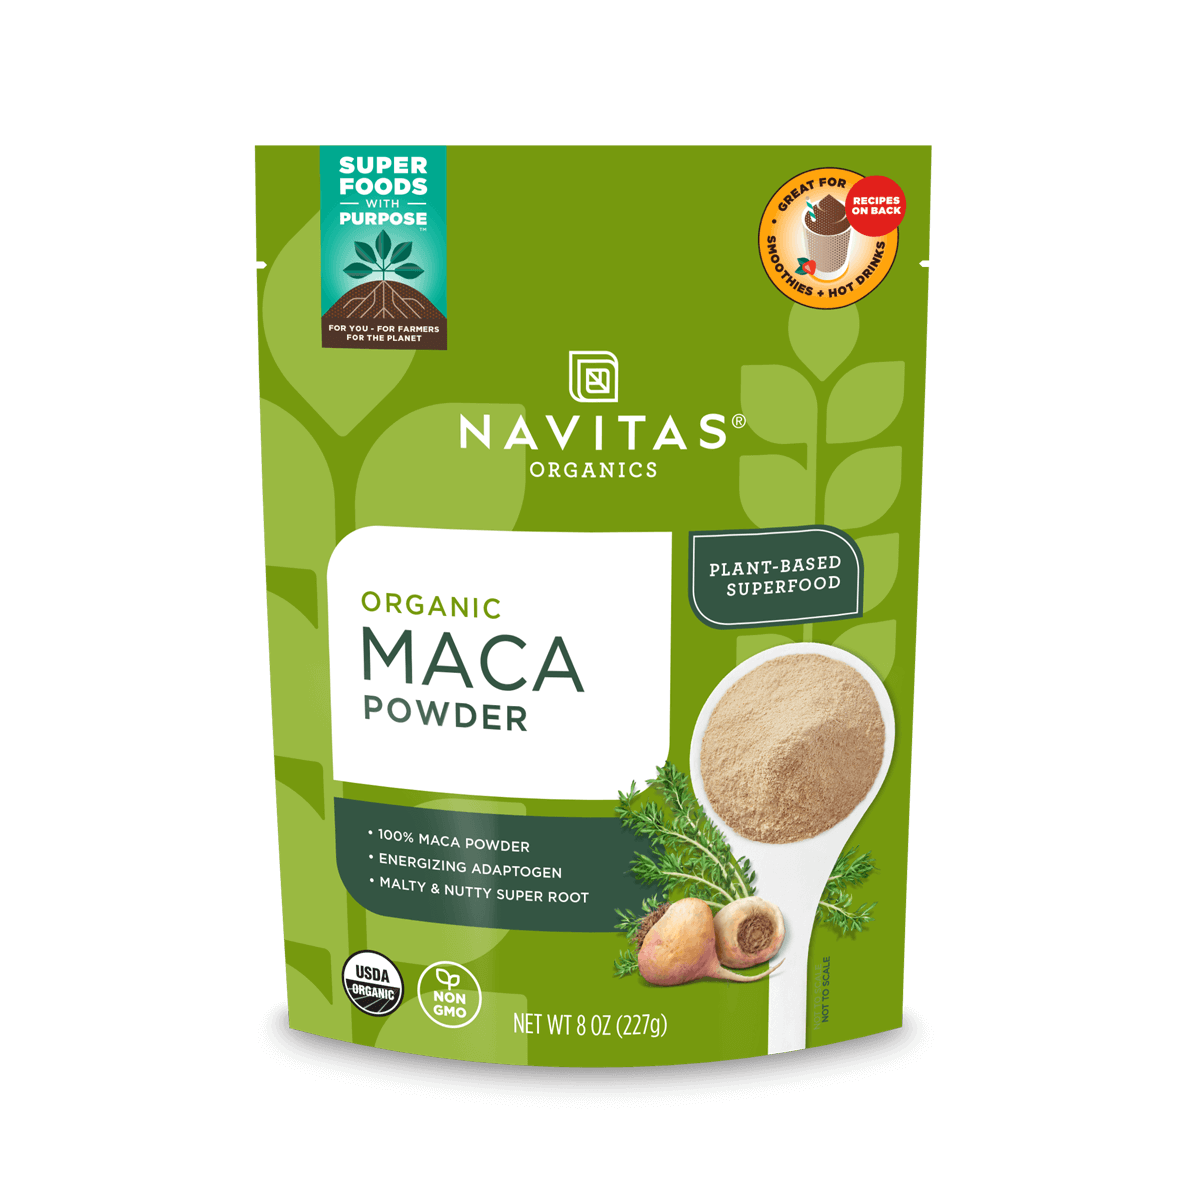 Navitas Organics Maca Powder 8oz. front of bag.